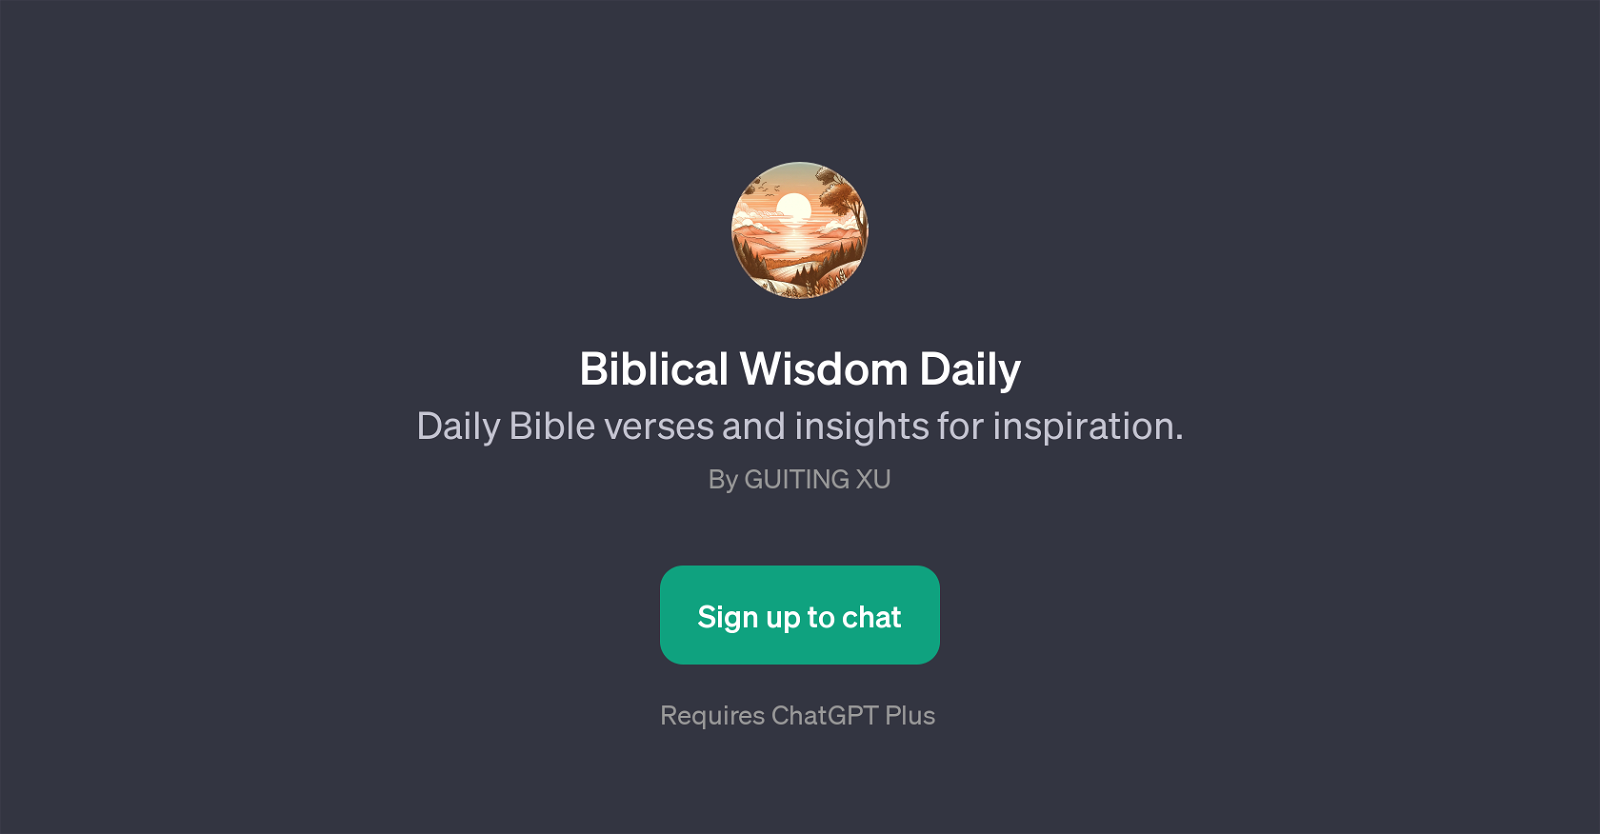 Biblical Wisdom Daily website